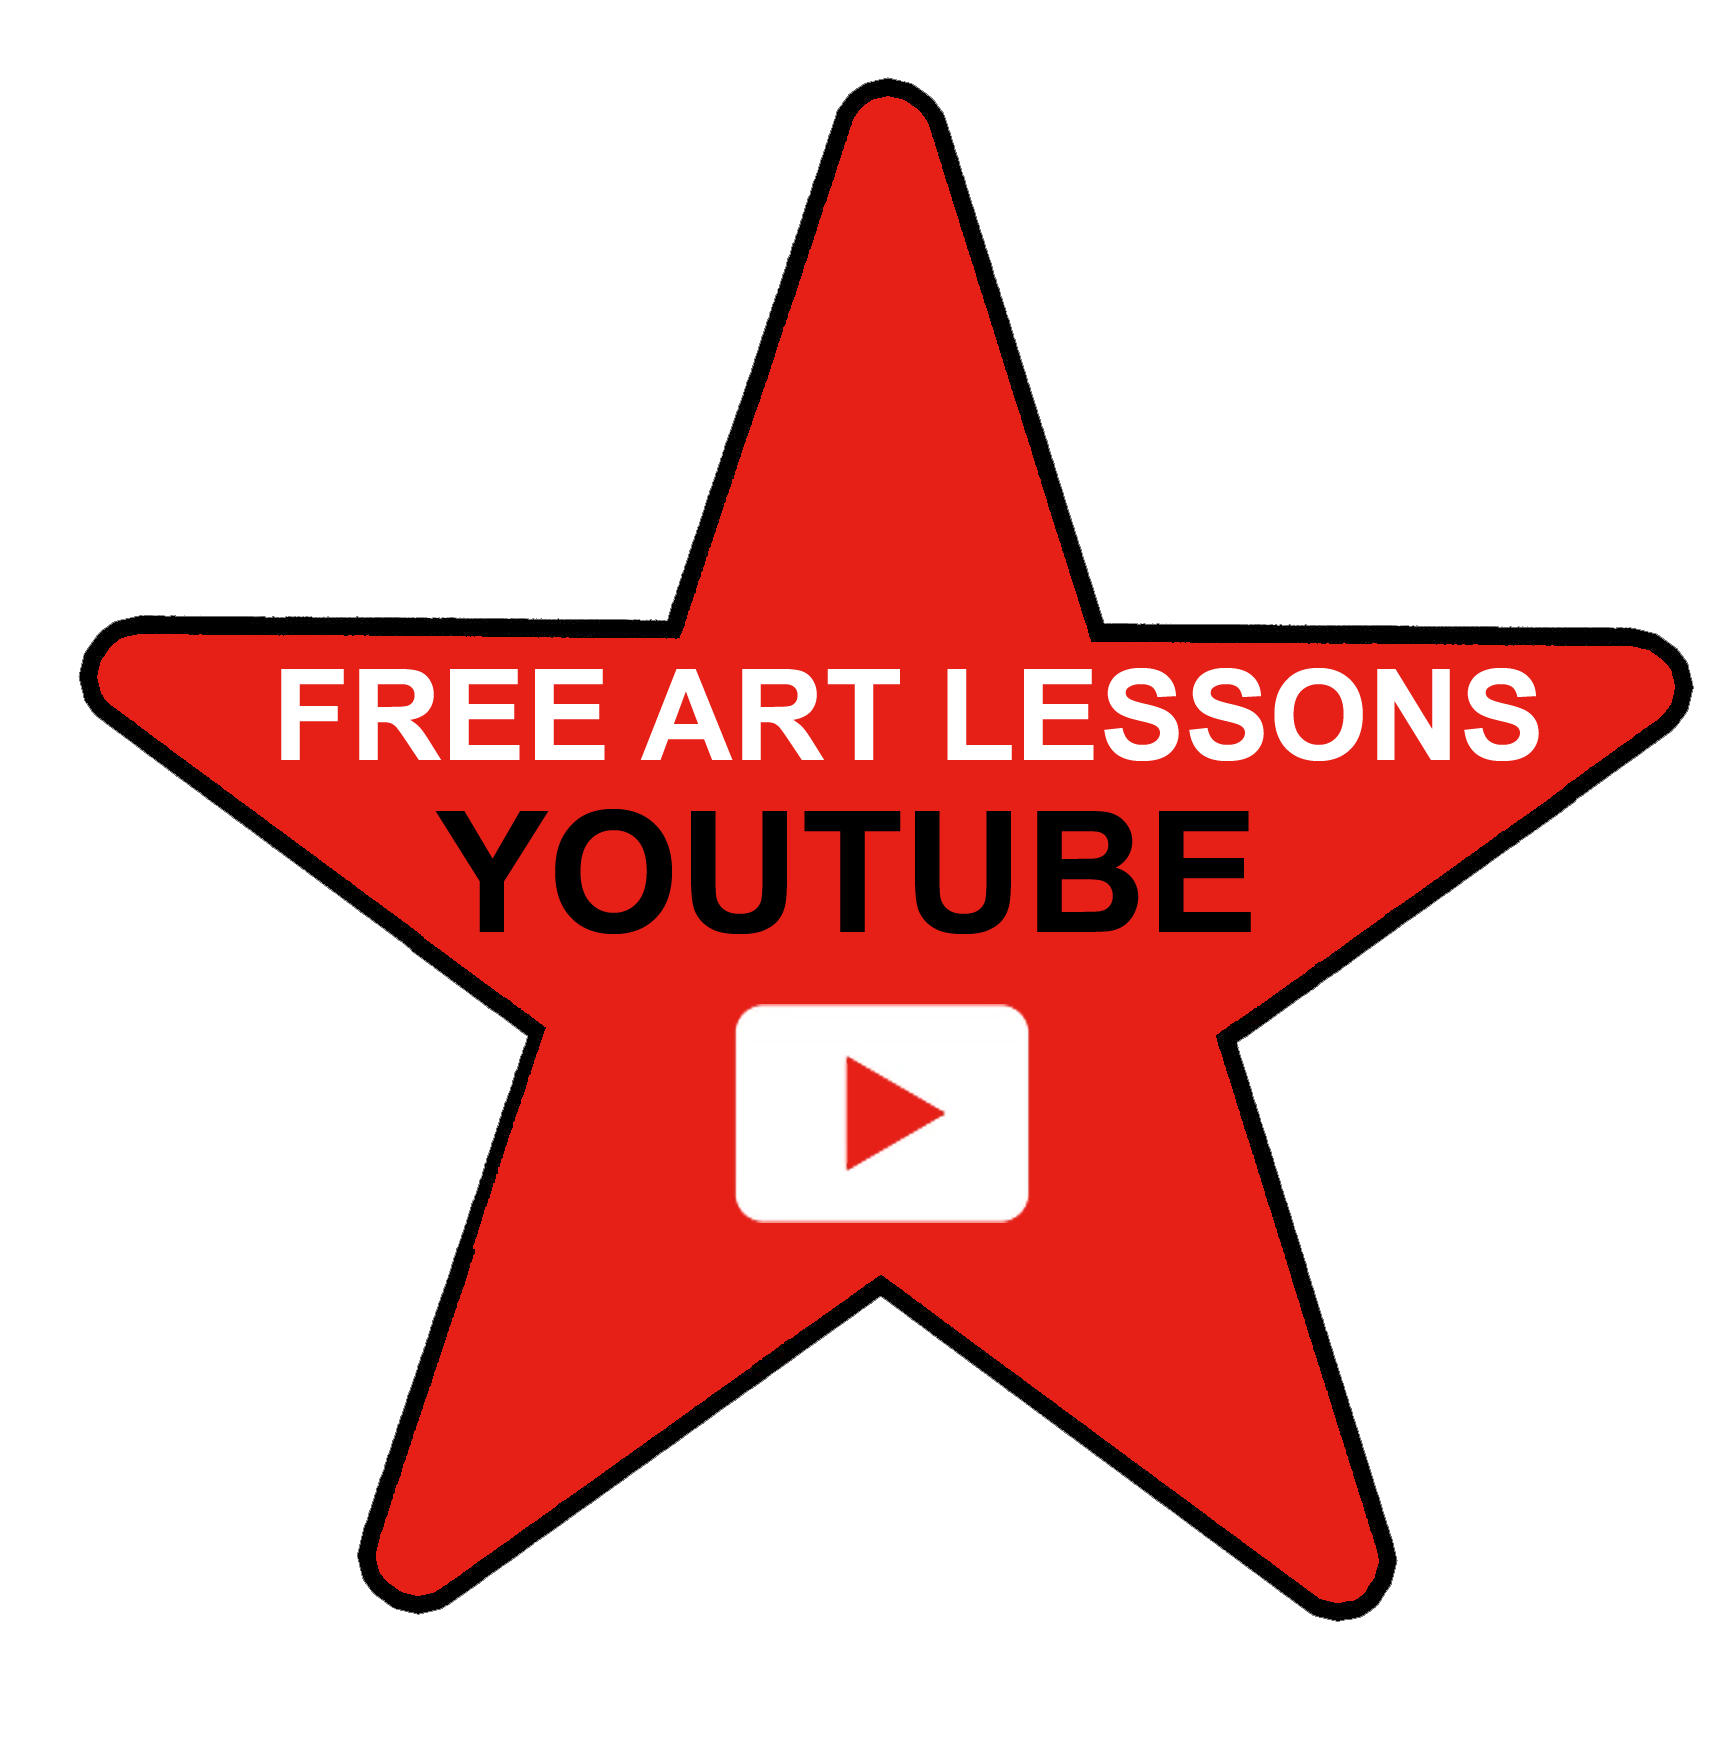 FREE ART LESSONS